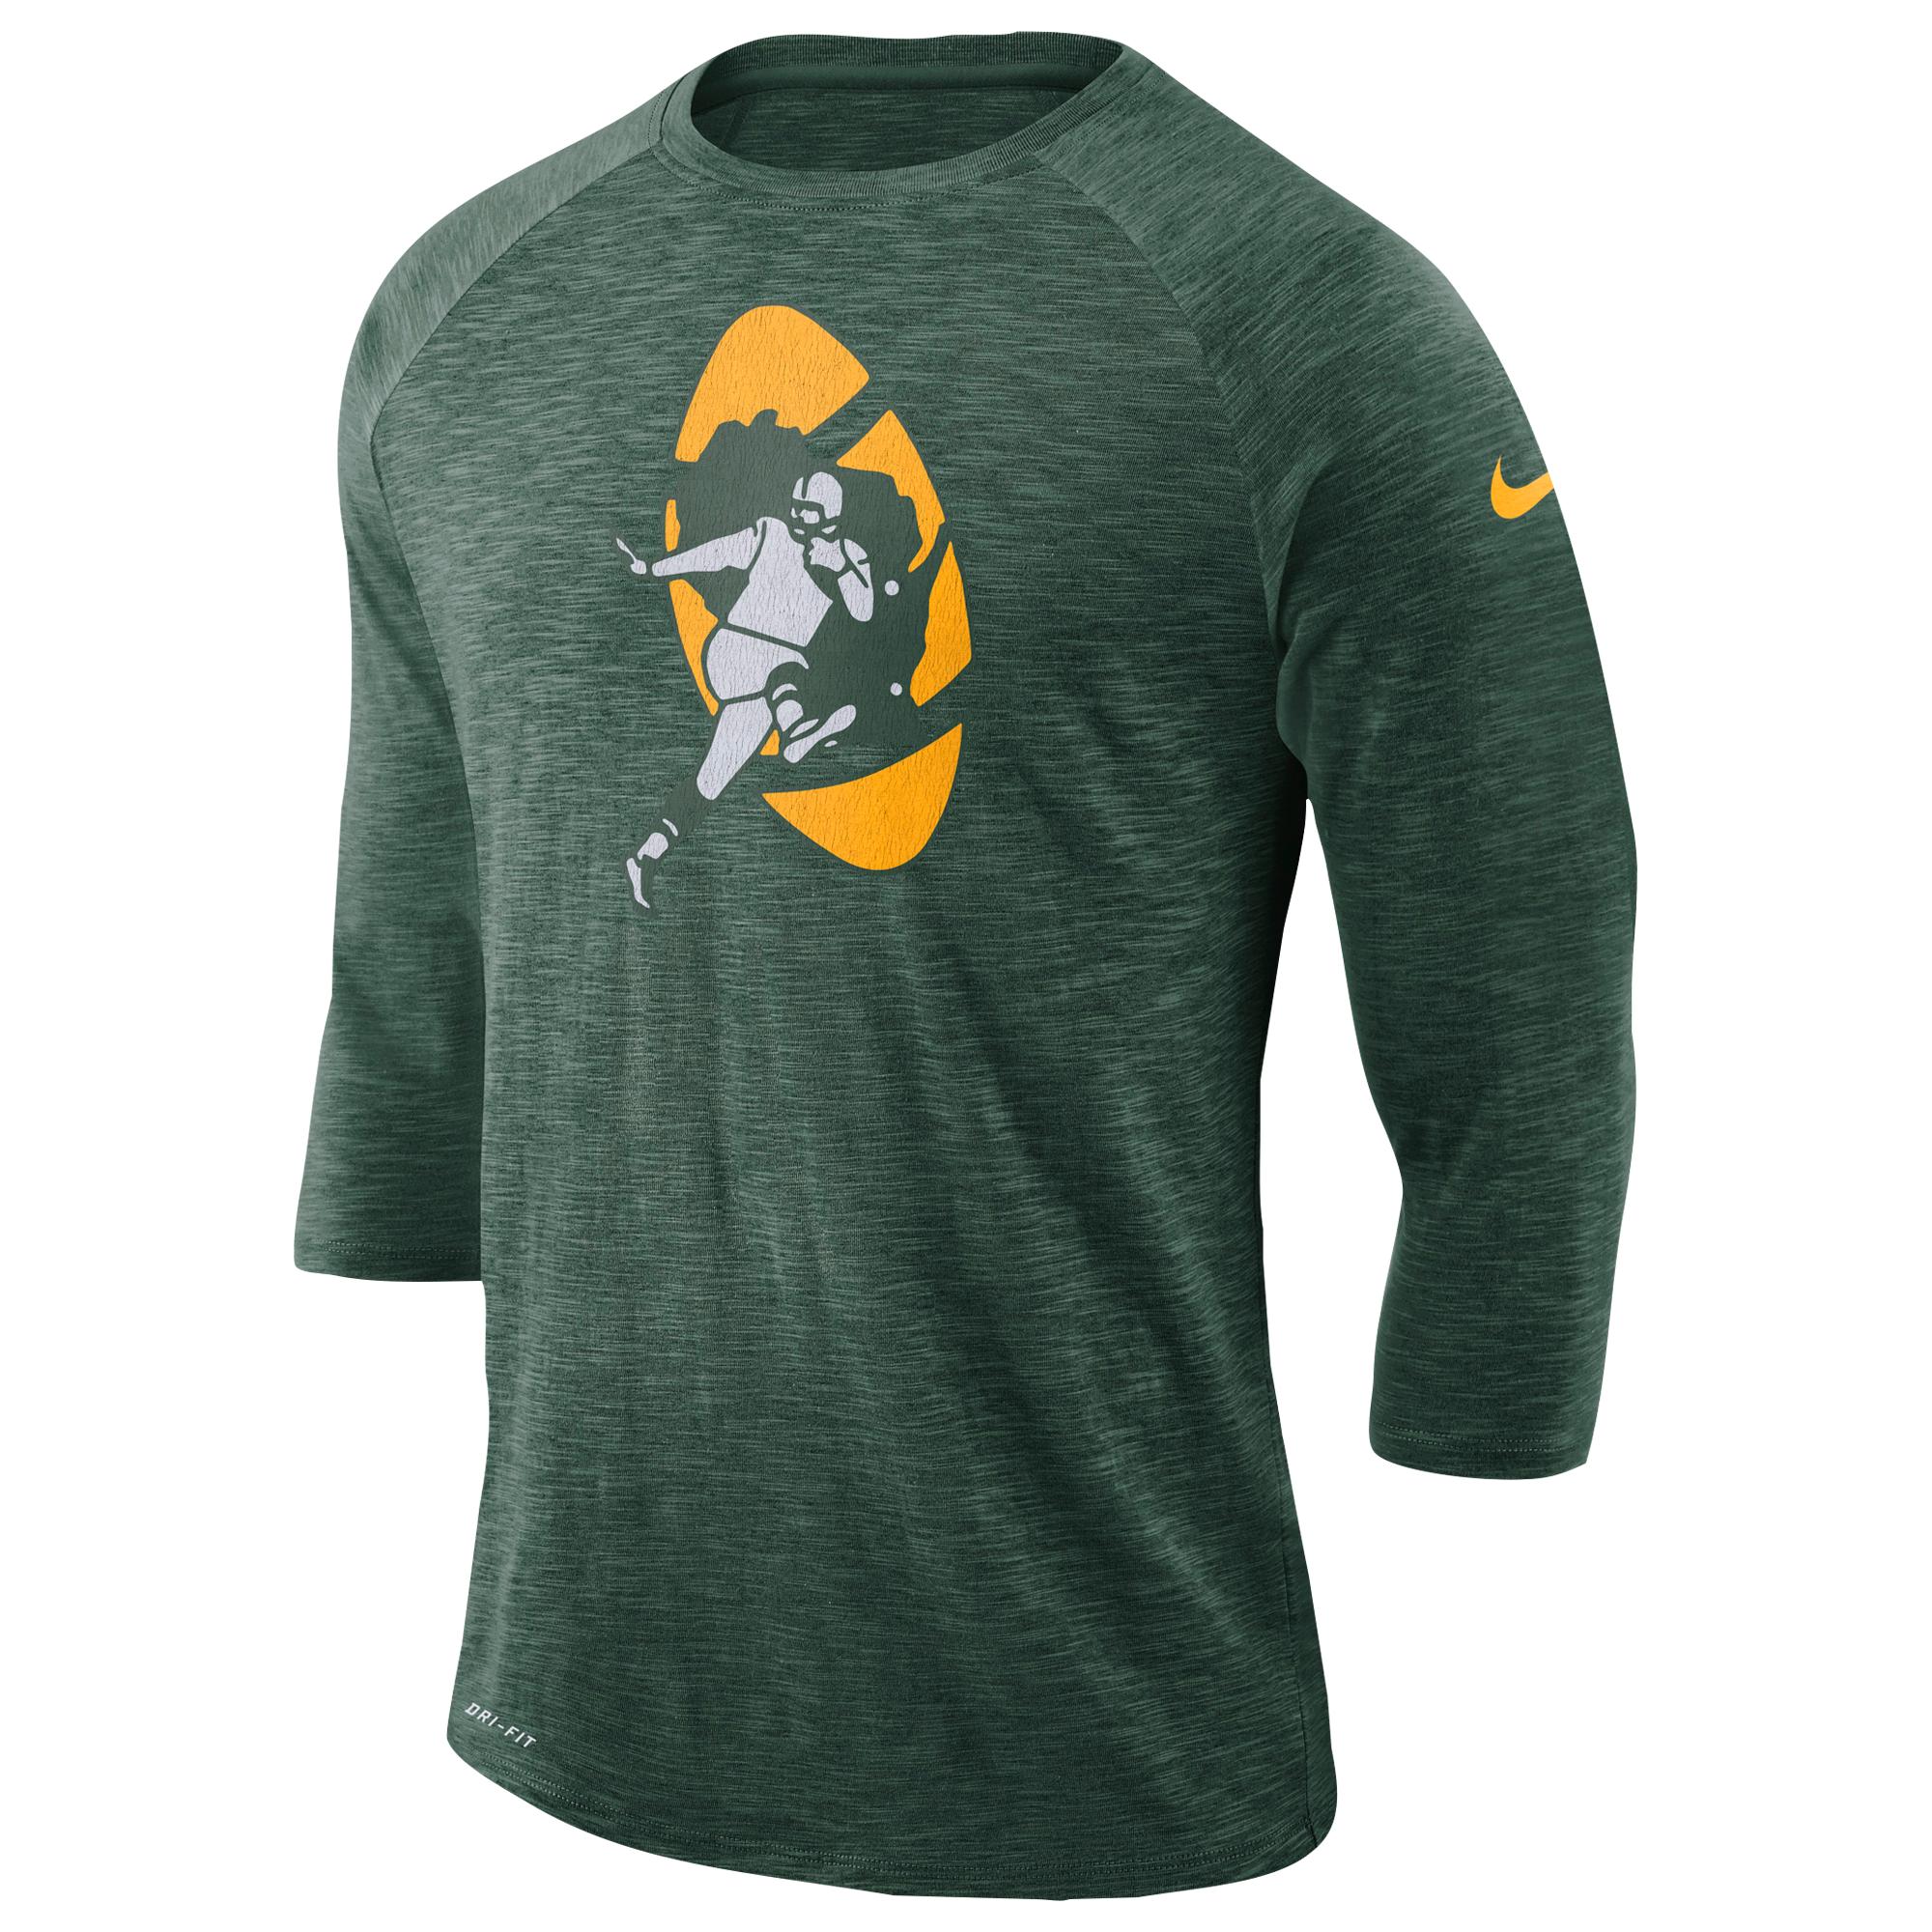 Nike Nfl Tri-blend Historic Crackle 3/4 T-shirt in Green for Men - Lyst